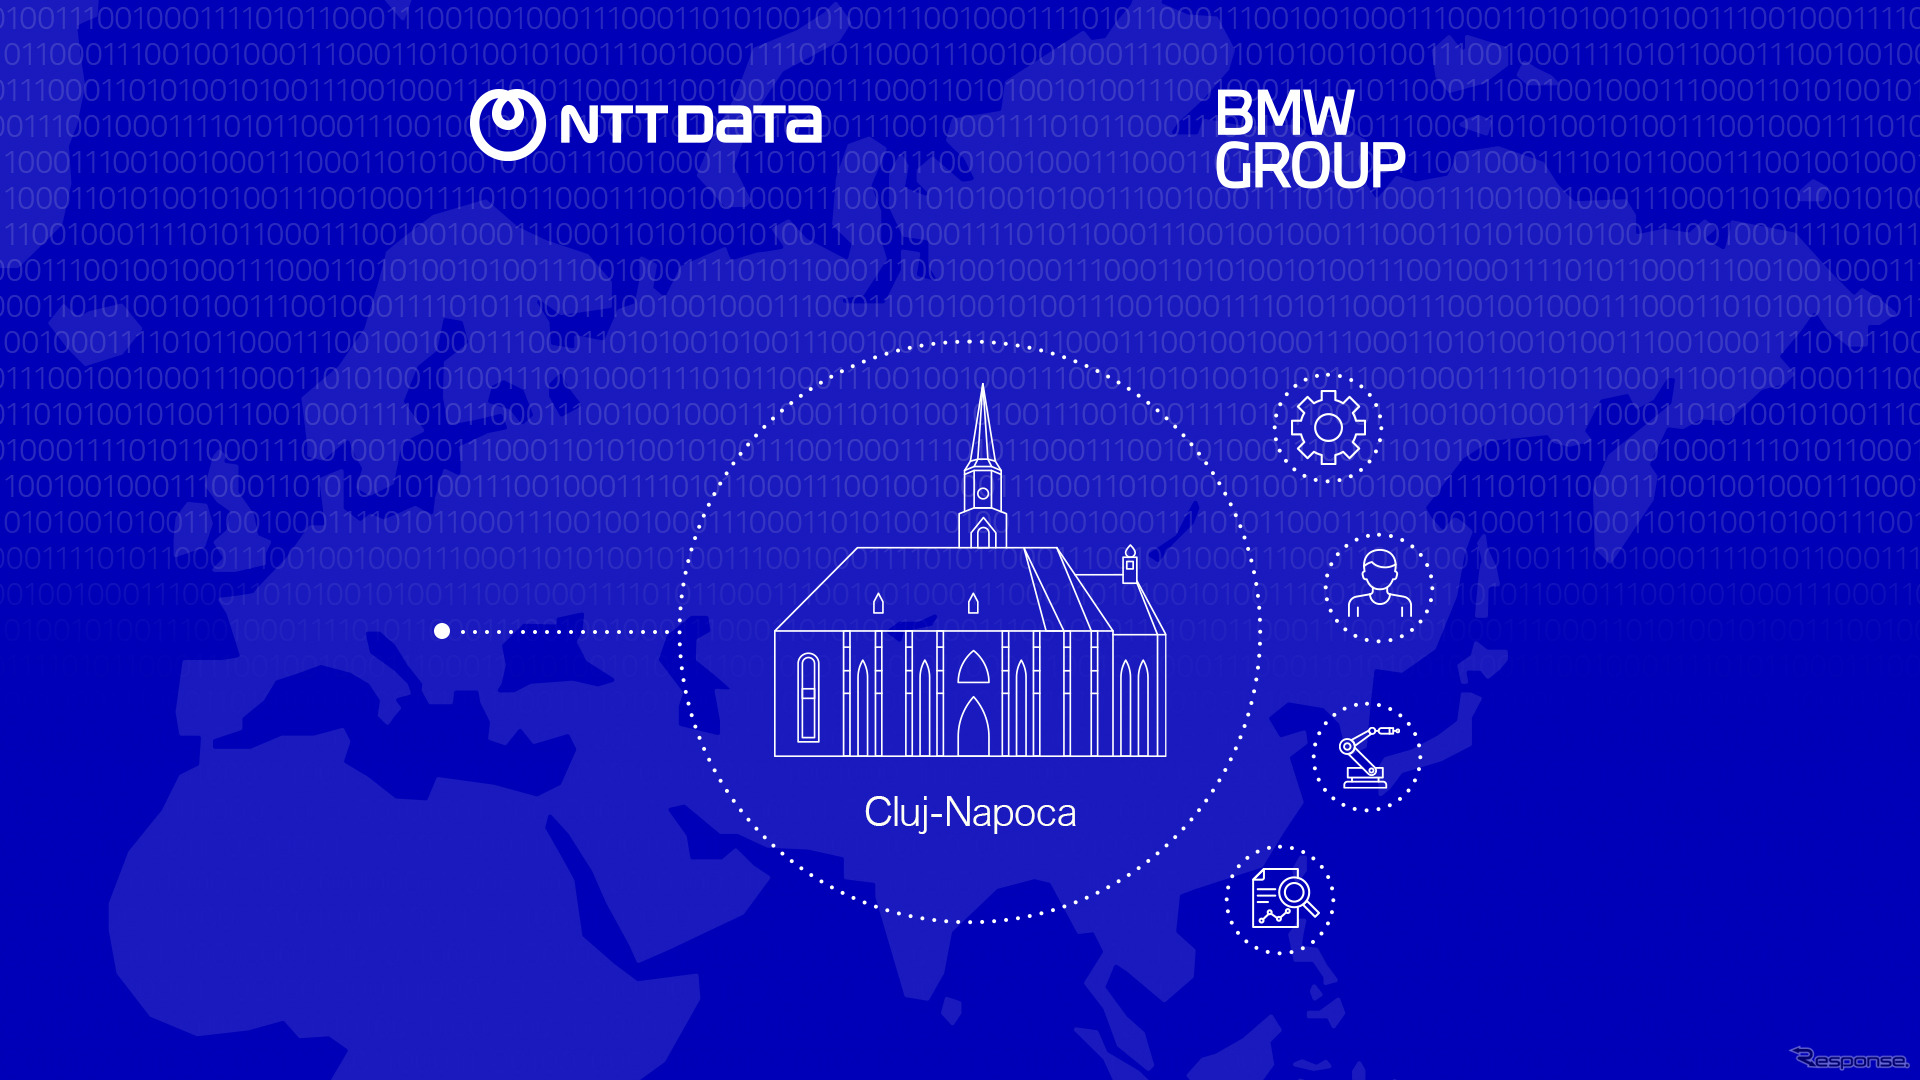 BMWグループとNTTデータがルーマニアに合弁会社を設立